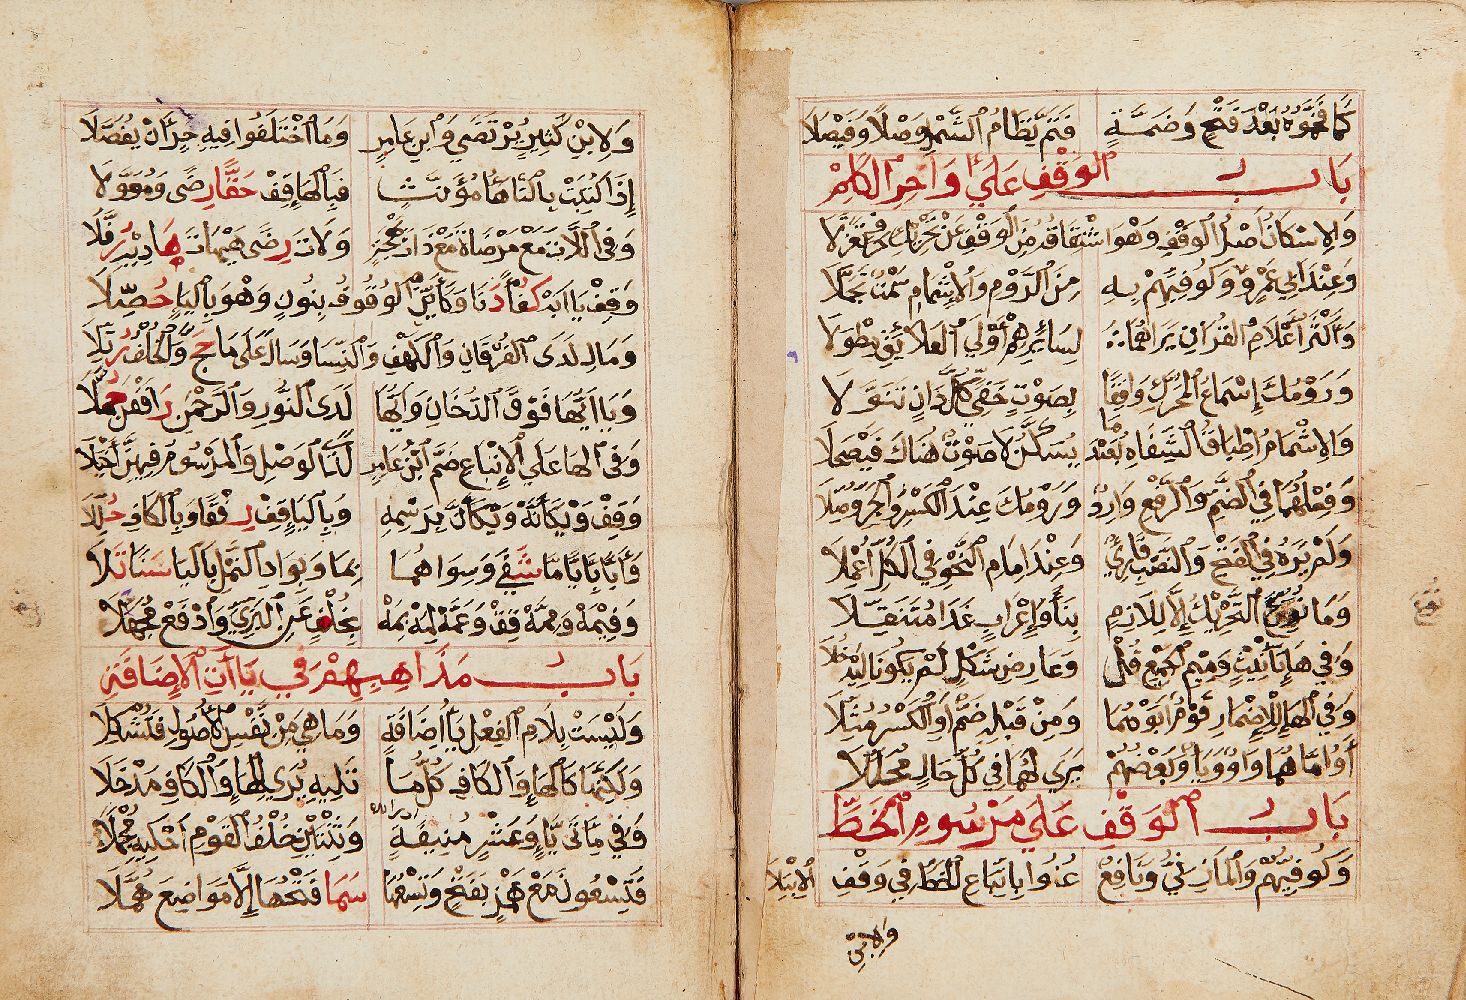 Kitab zul Ala'mani wa wajah al-Tahani (A Commentary on the Qur'an), copied by Abdullah bin Ahmed - Image 2 of 4